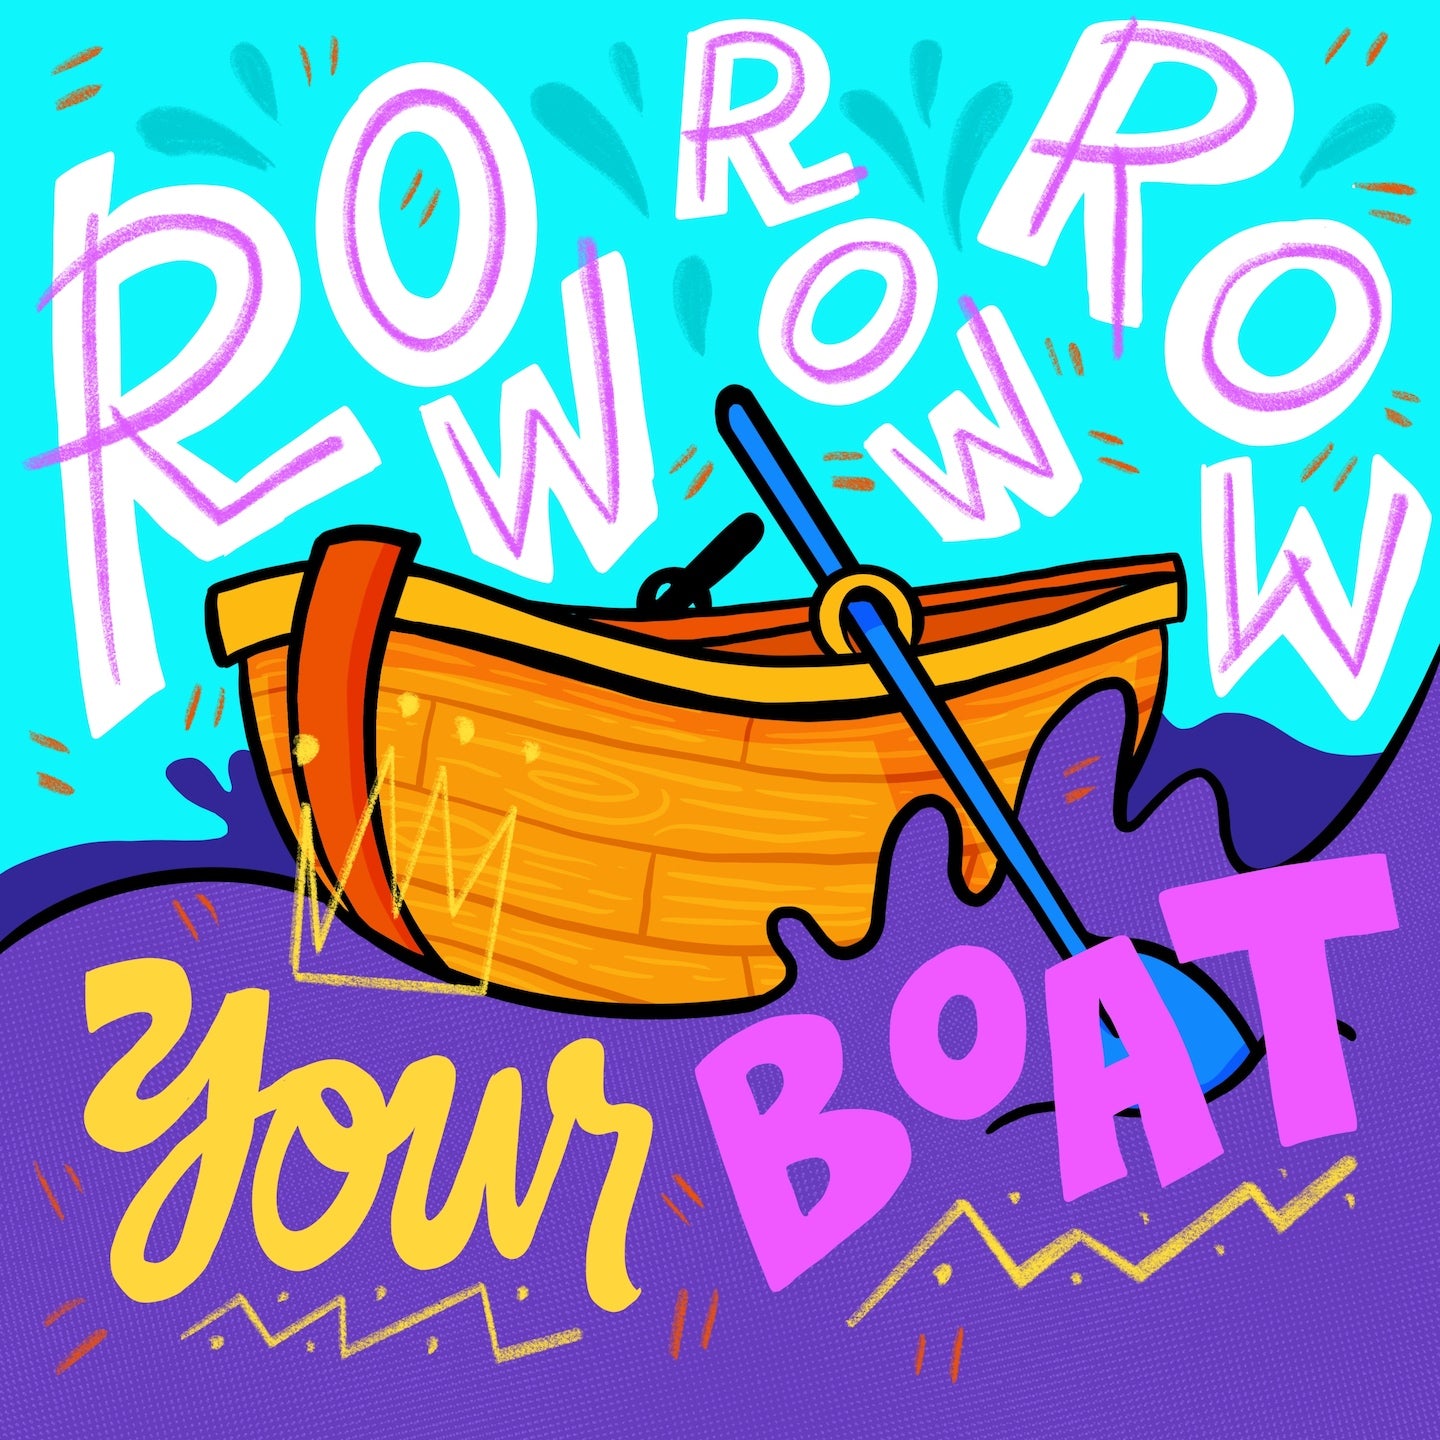 Row Row Row Your Boat (Rap Remix)